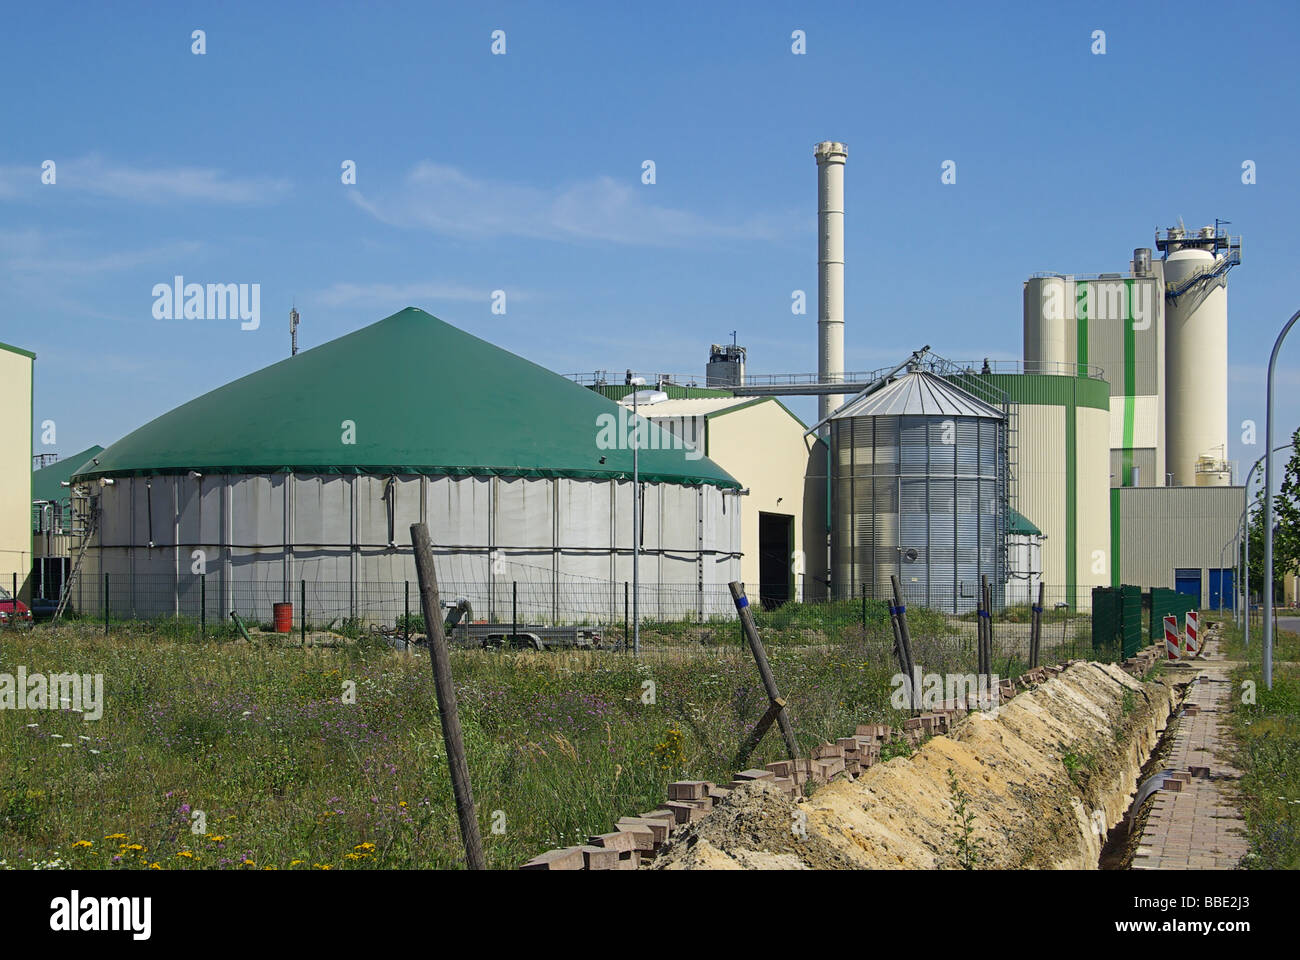 Biogasanlage biogas plant 19 Stock Photo